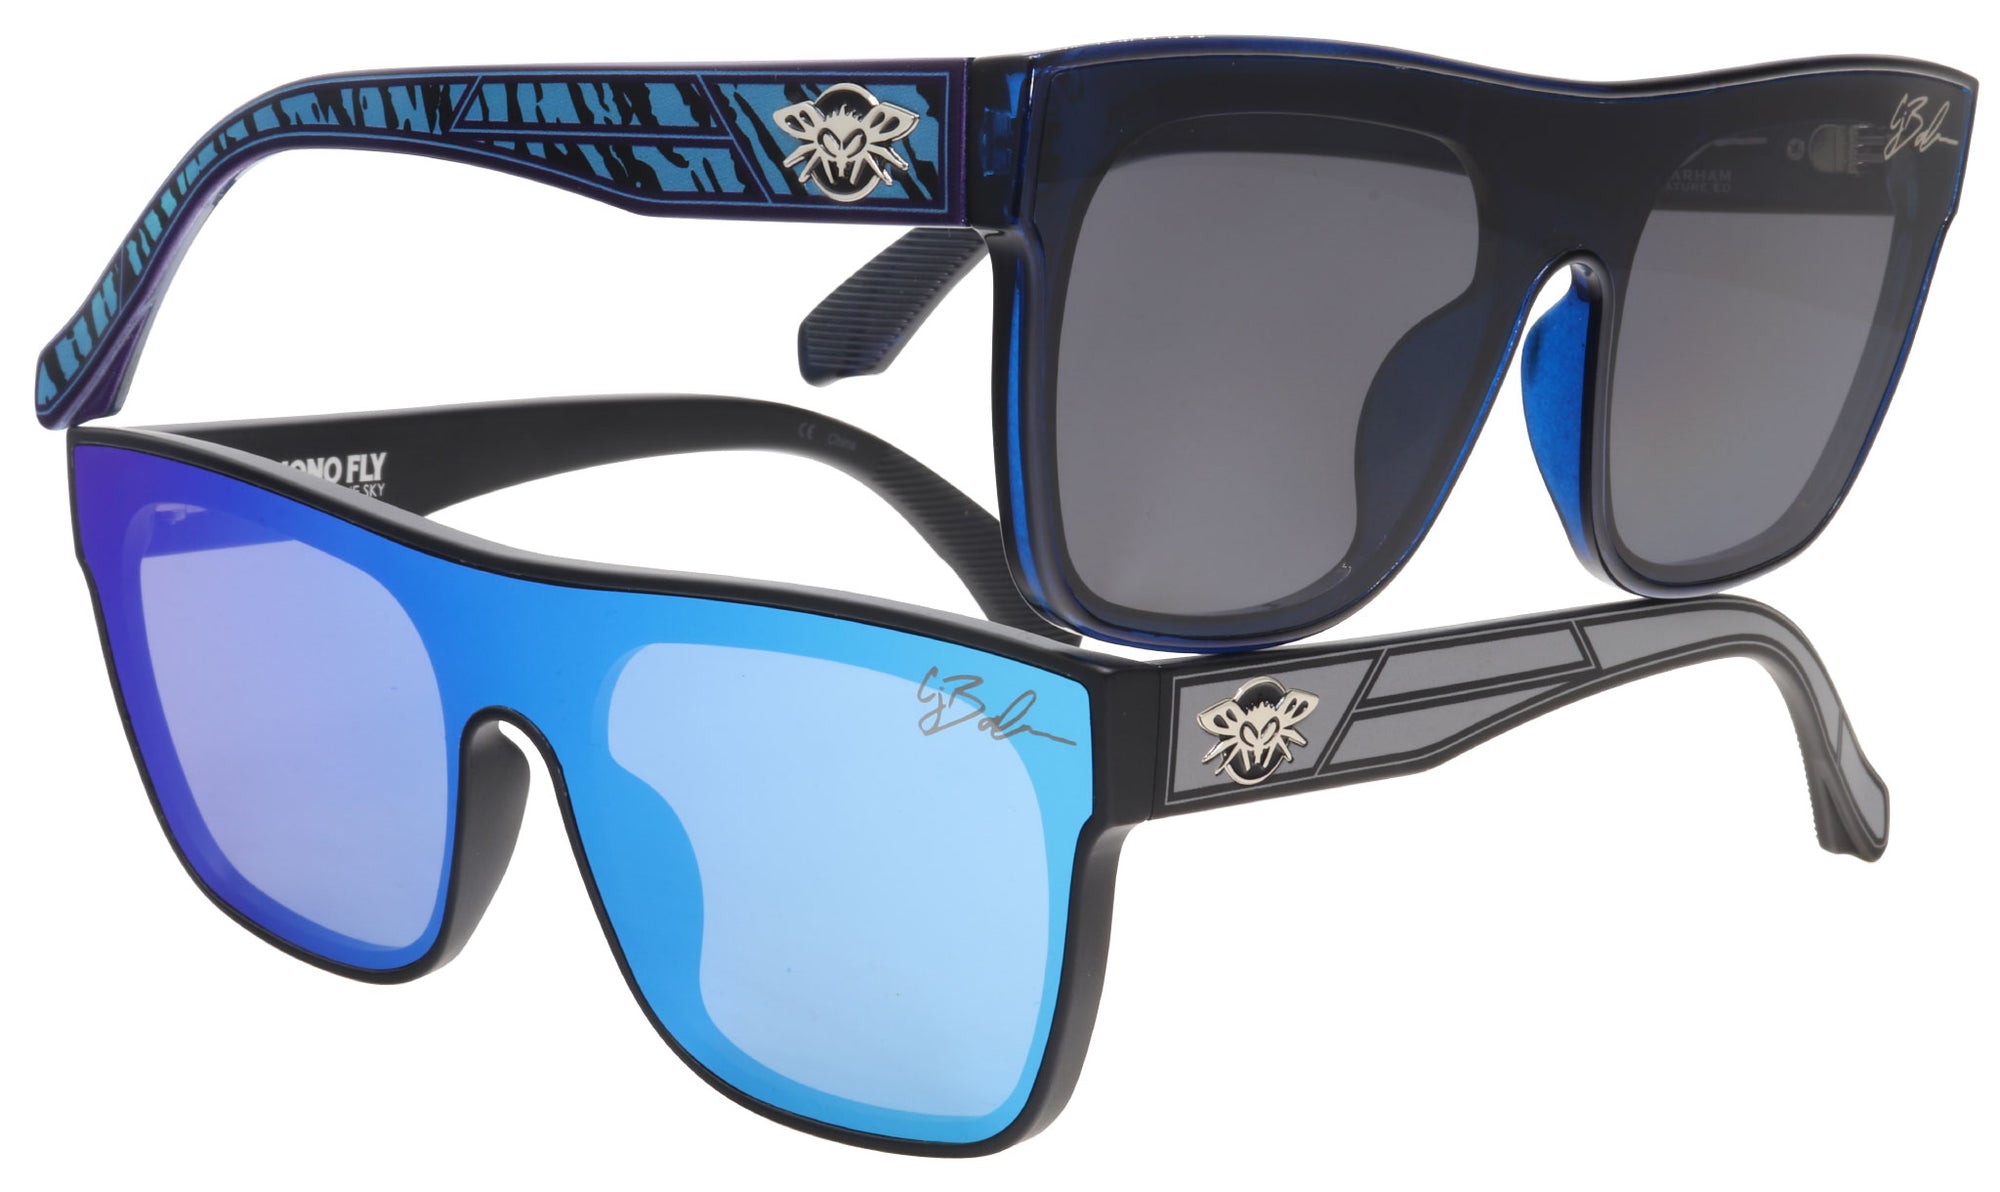 Honest Review: Best Polarized Sunglasses for fishing - YouTube